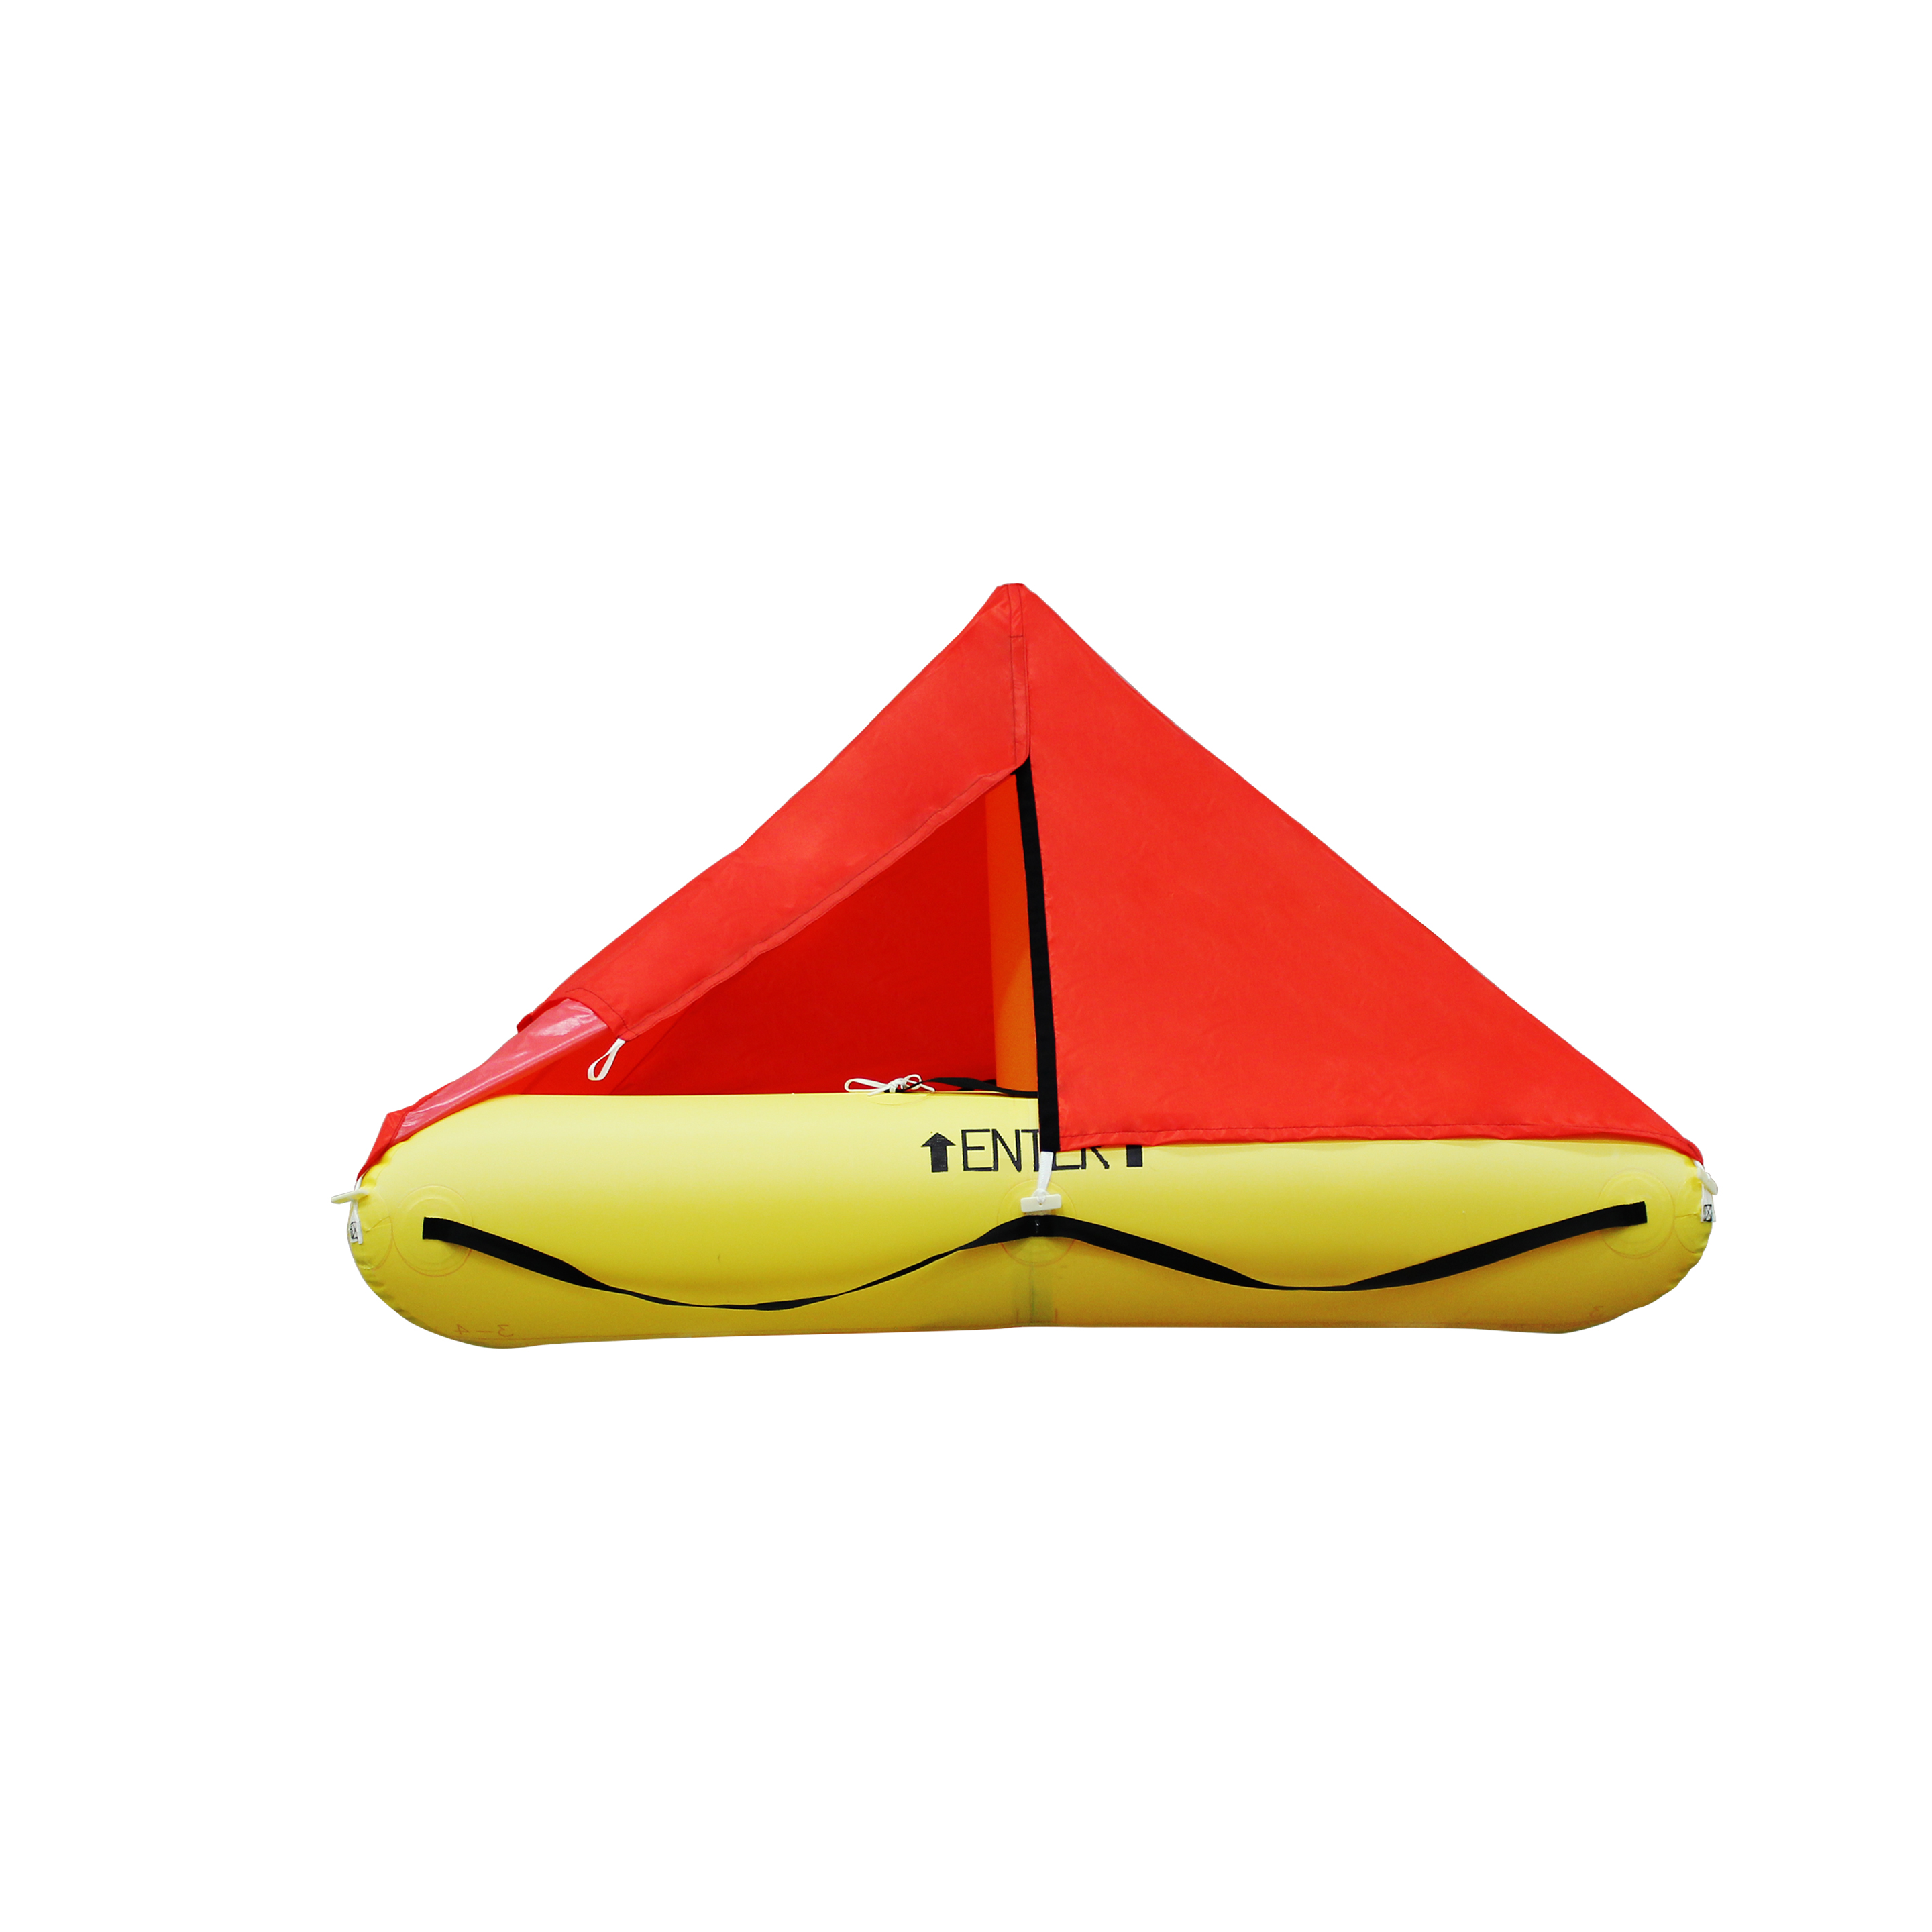 TSO 4 Person Life Raft with FAR 121 Survival Equipment Kit